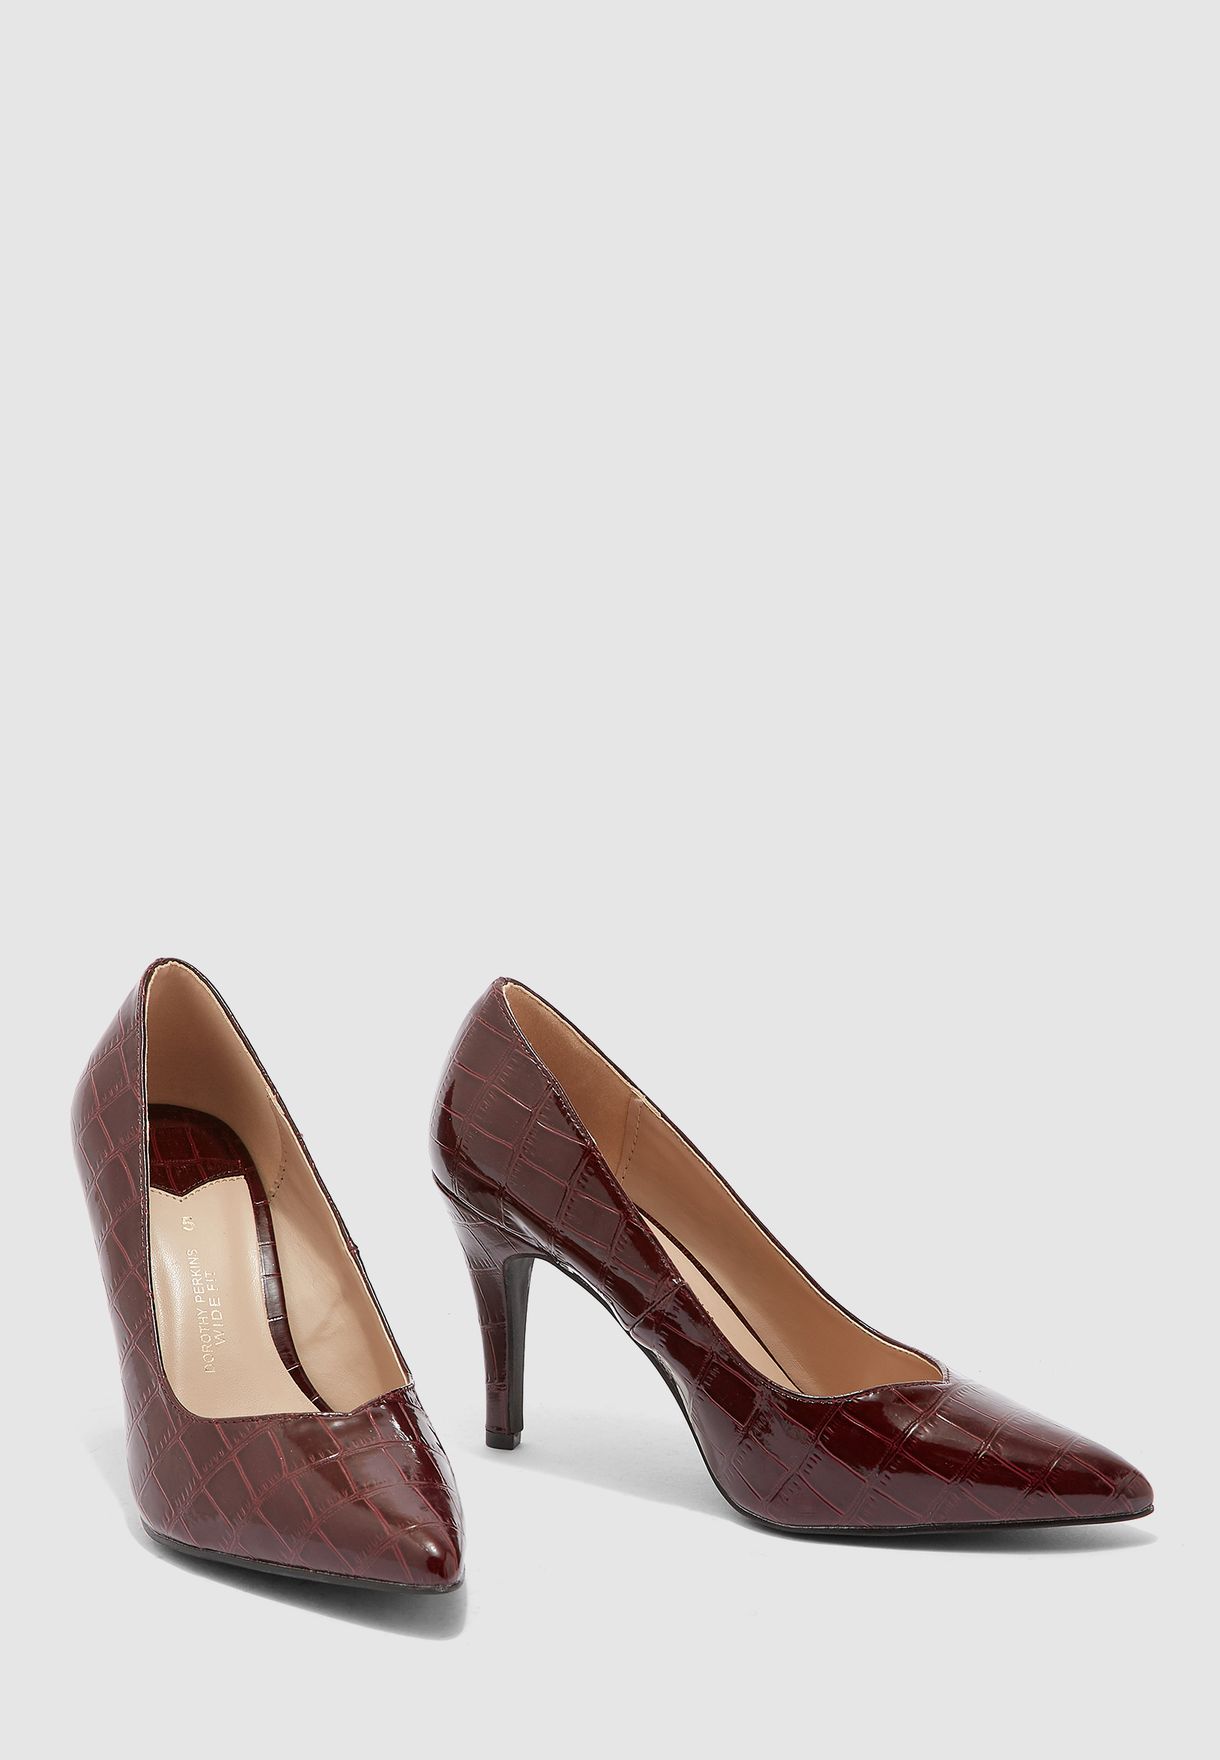 dorothy perkins burgundy shoes